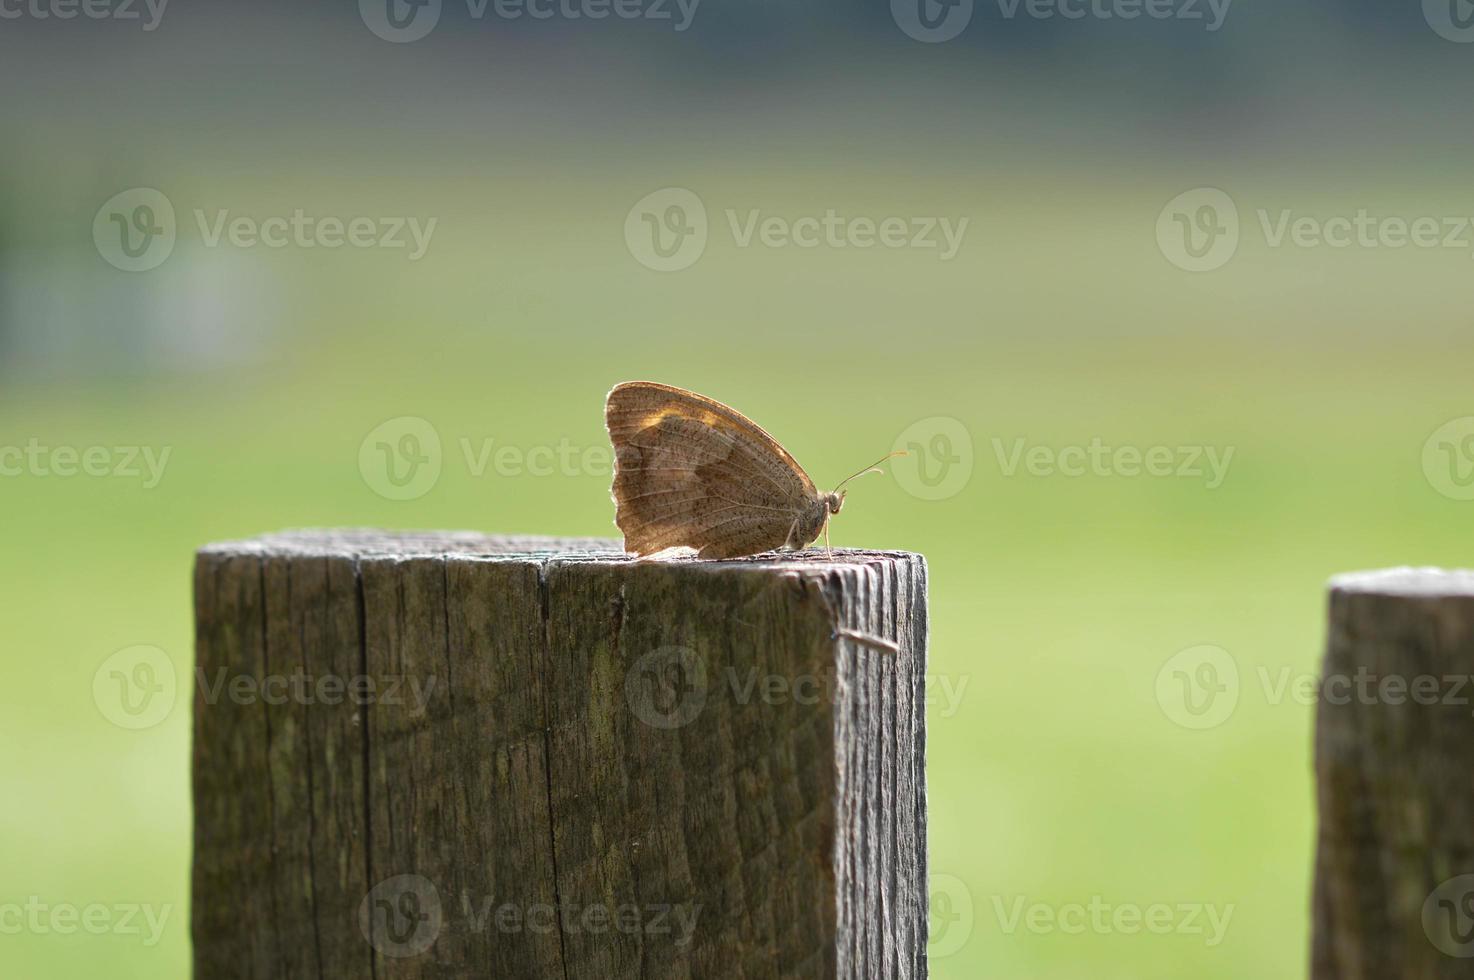 großer Heide-Schmetterling auf dem Zaun, Nahaufnahme, Makro, foto